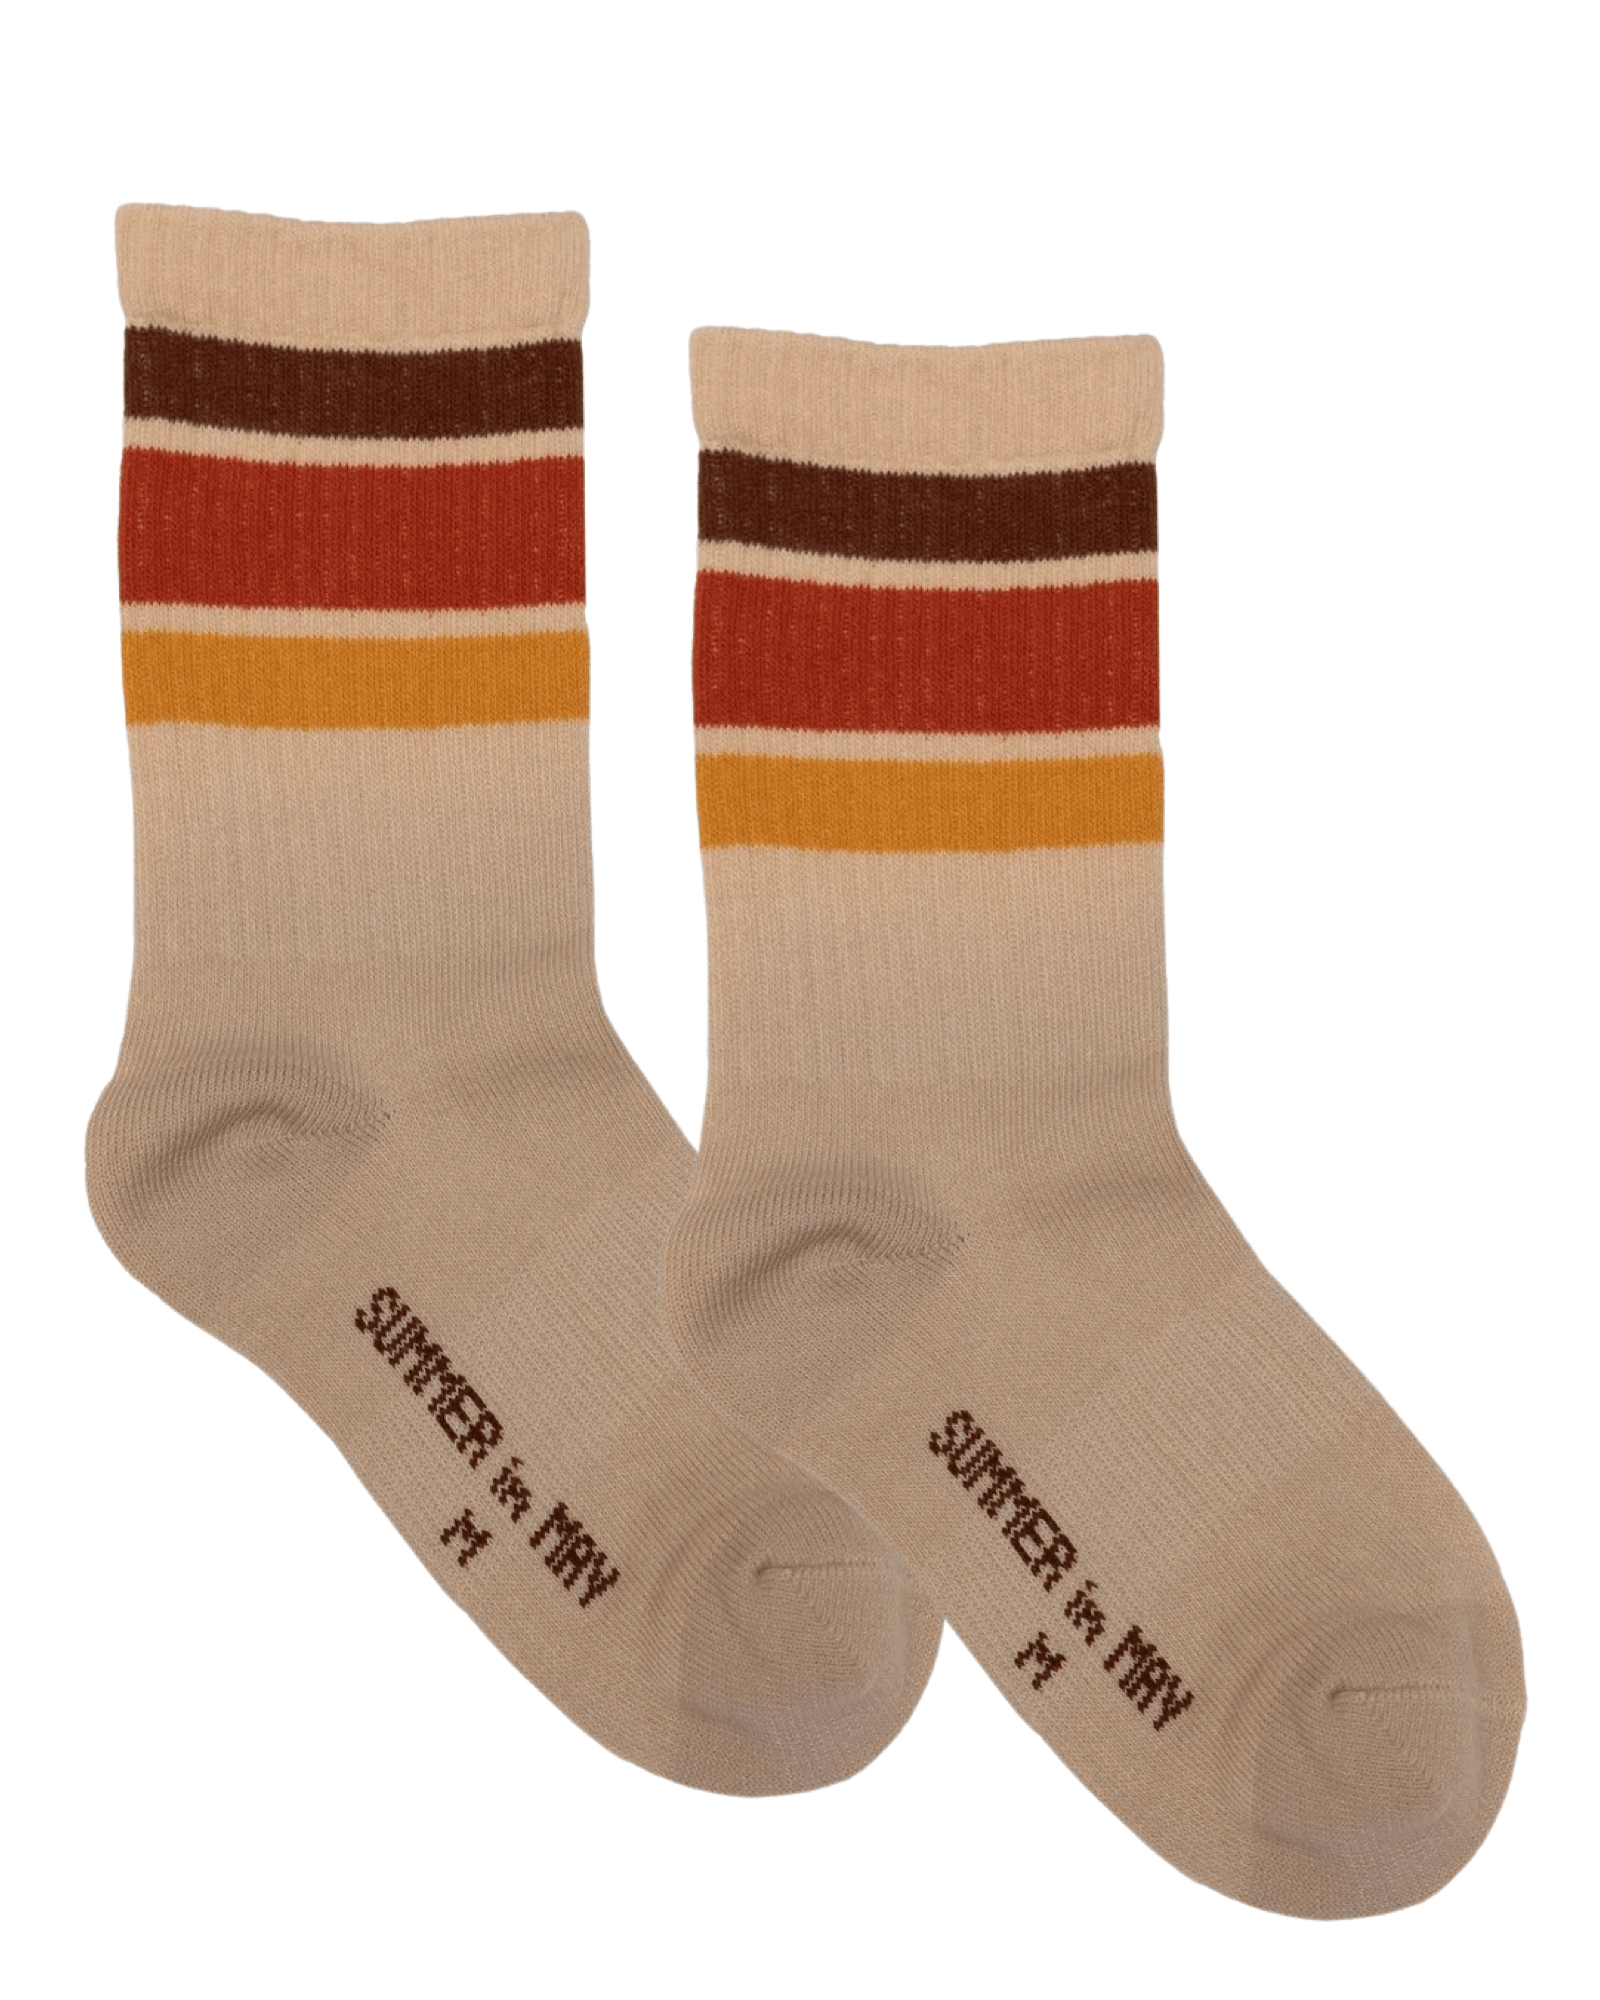 Socks - 1980